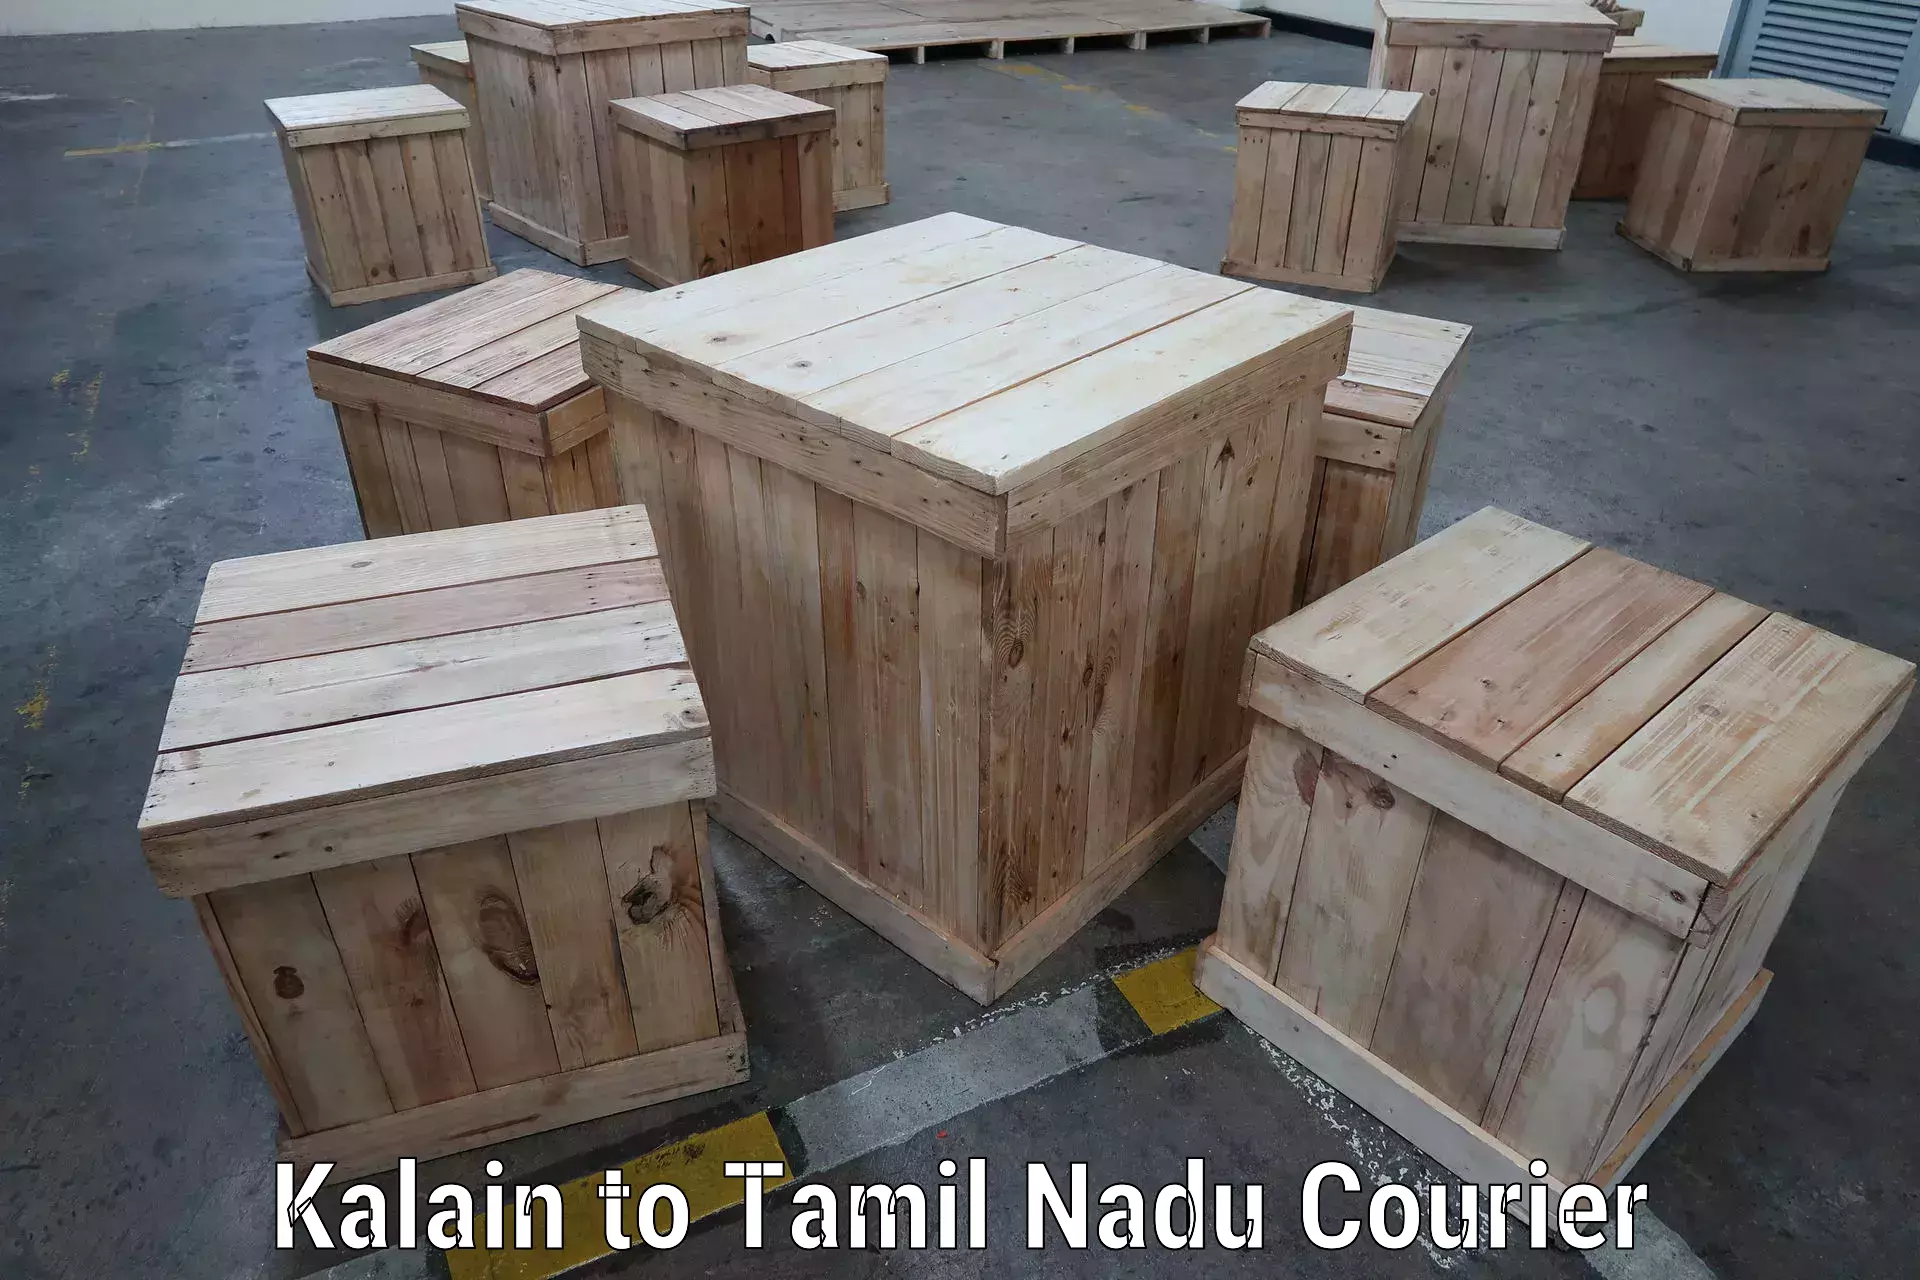 High-performance logistics Kalain to Tamil Nadu